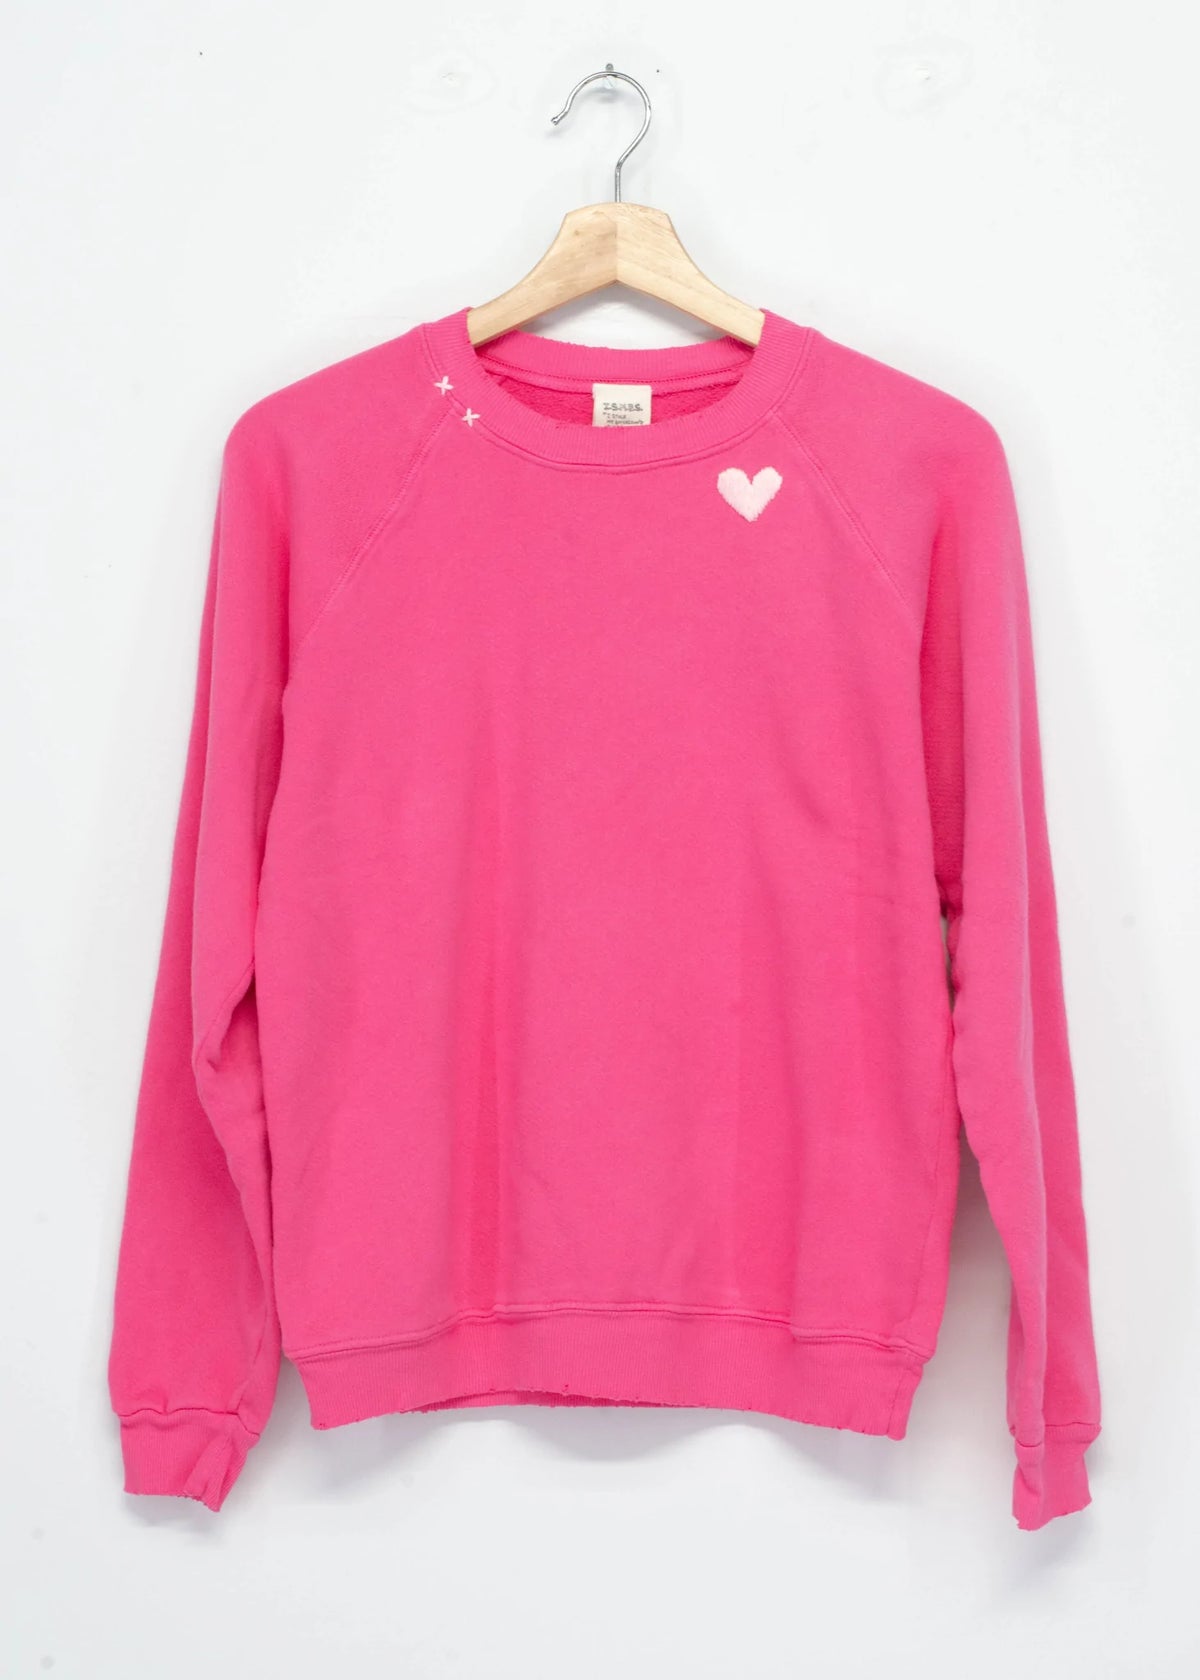 I Stole My Boyfriend's Shirt - Heart Sweatshirt - Council Studio